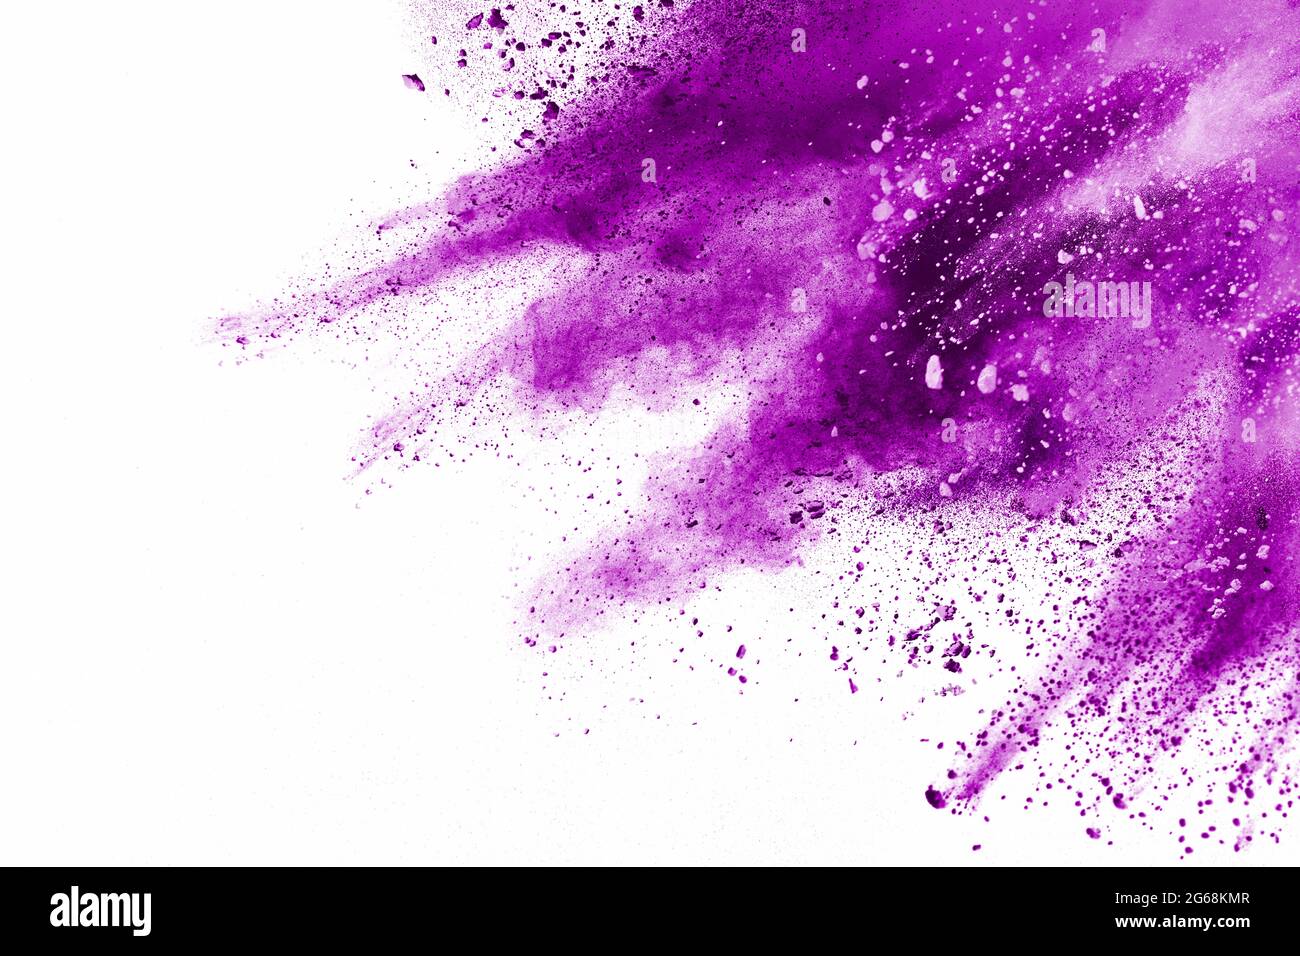 Purple particle explosion on white background.Freeze motion of purple dust splash on background. Stock Photo